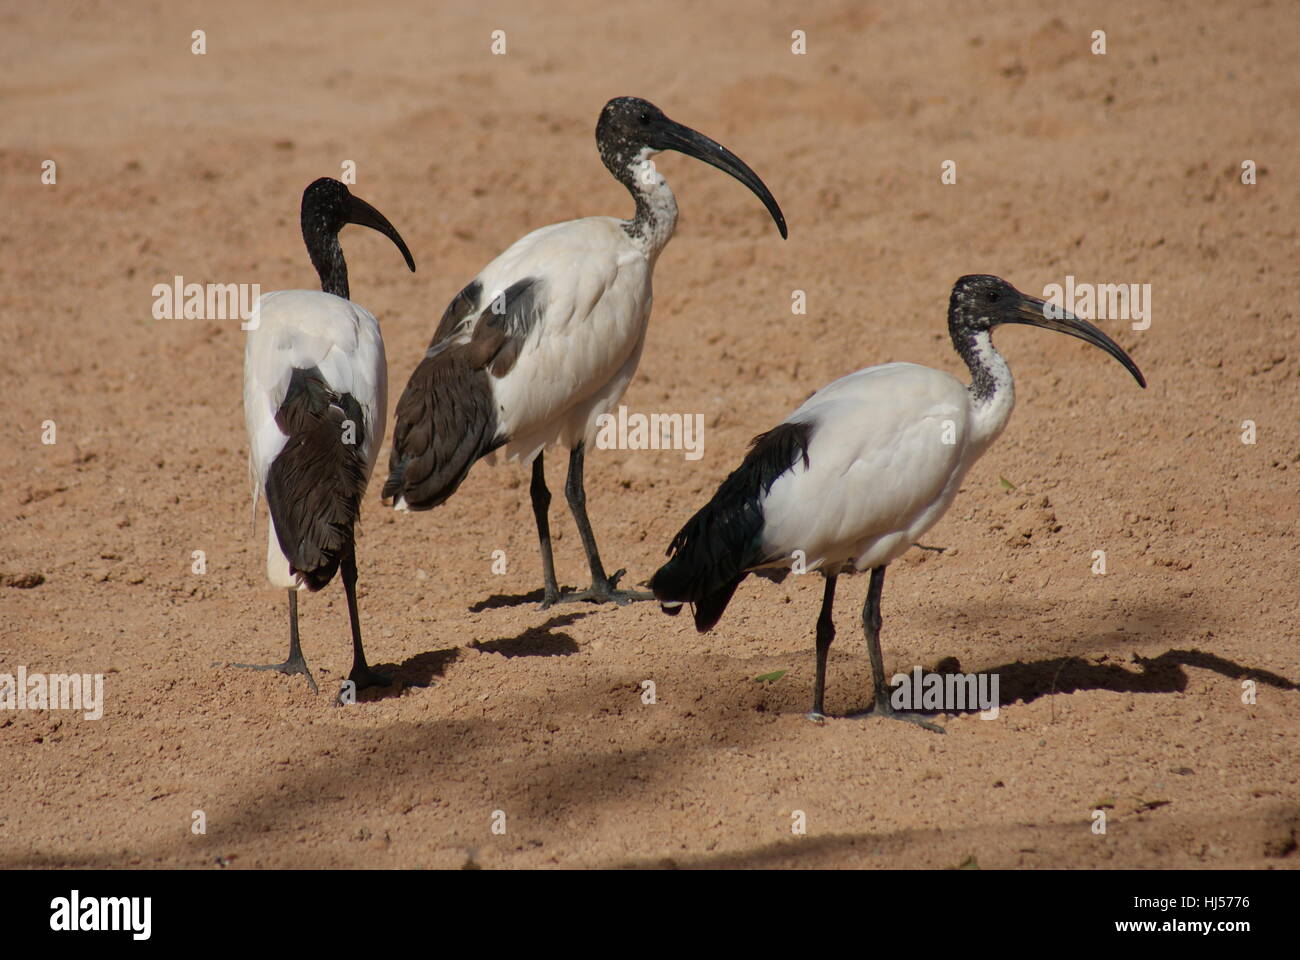 bird, africa, black, swarthy, jetblack, deep black, African, ibis, white, holy, Stock Photo